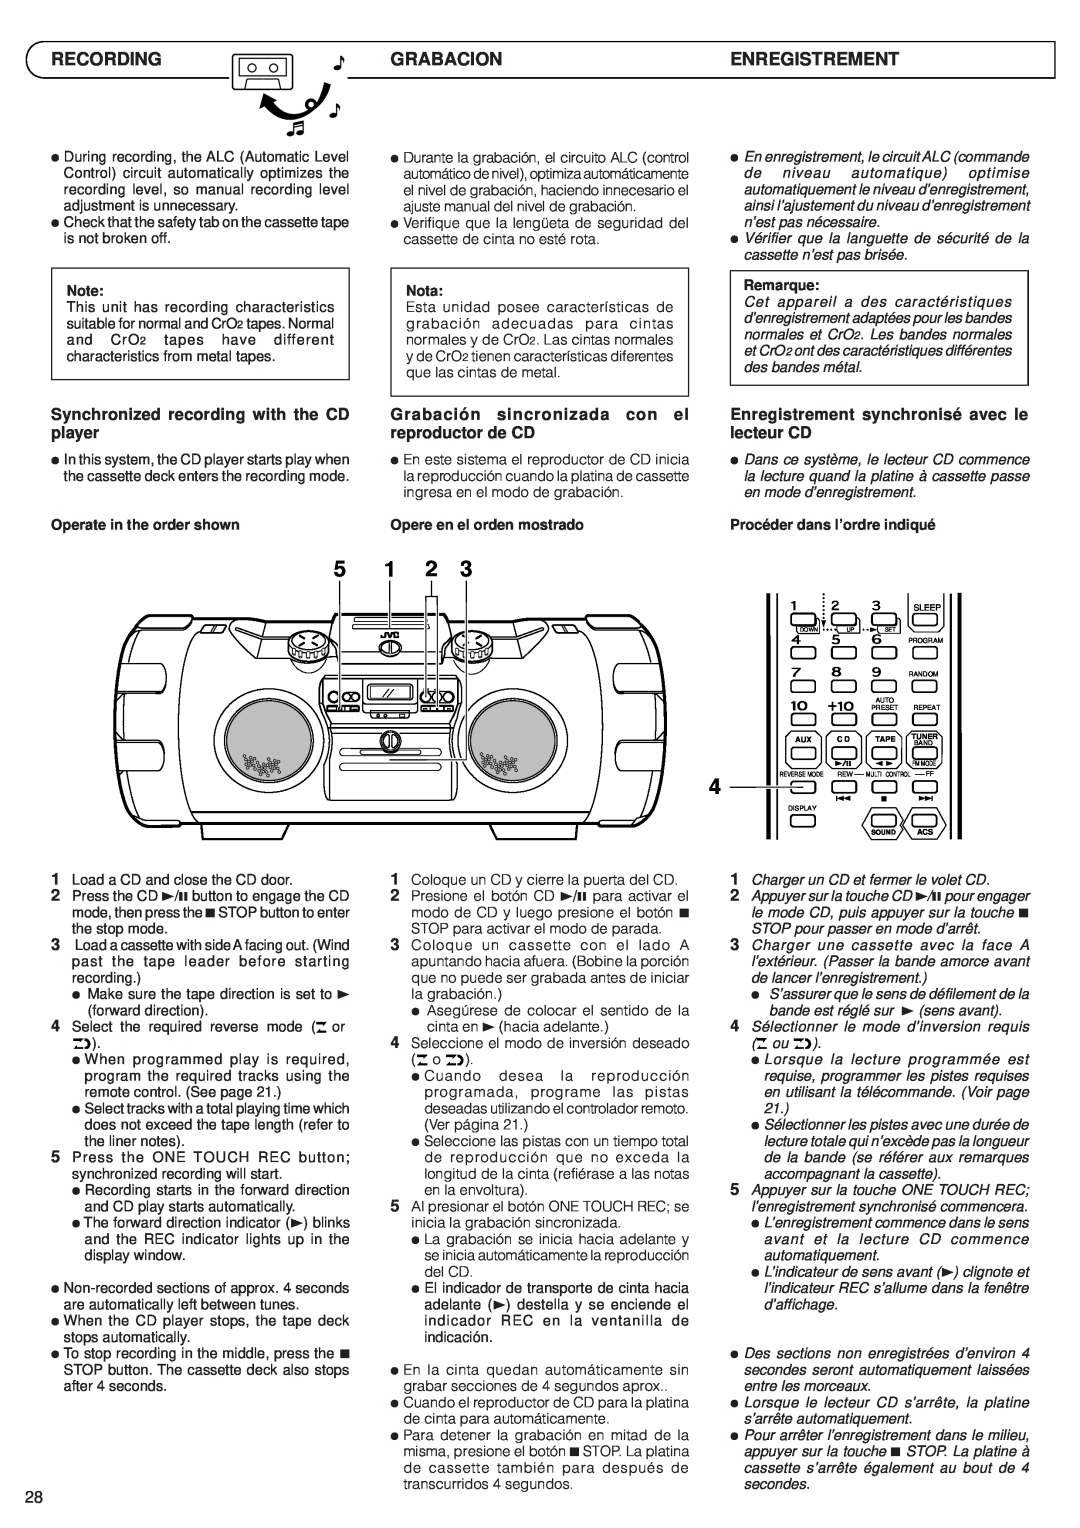 JVC RV-B99 manual Recording, Grabacion, Enregistrement, Synchronized recording with the CD player 